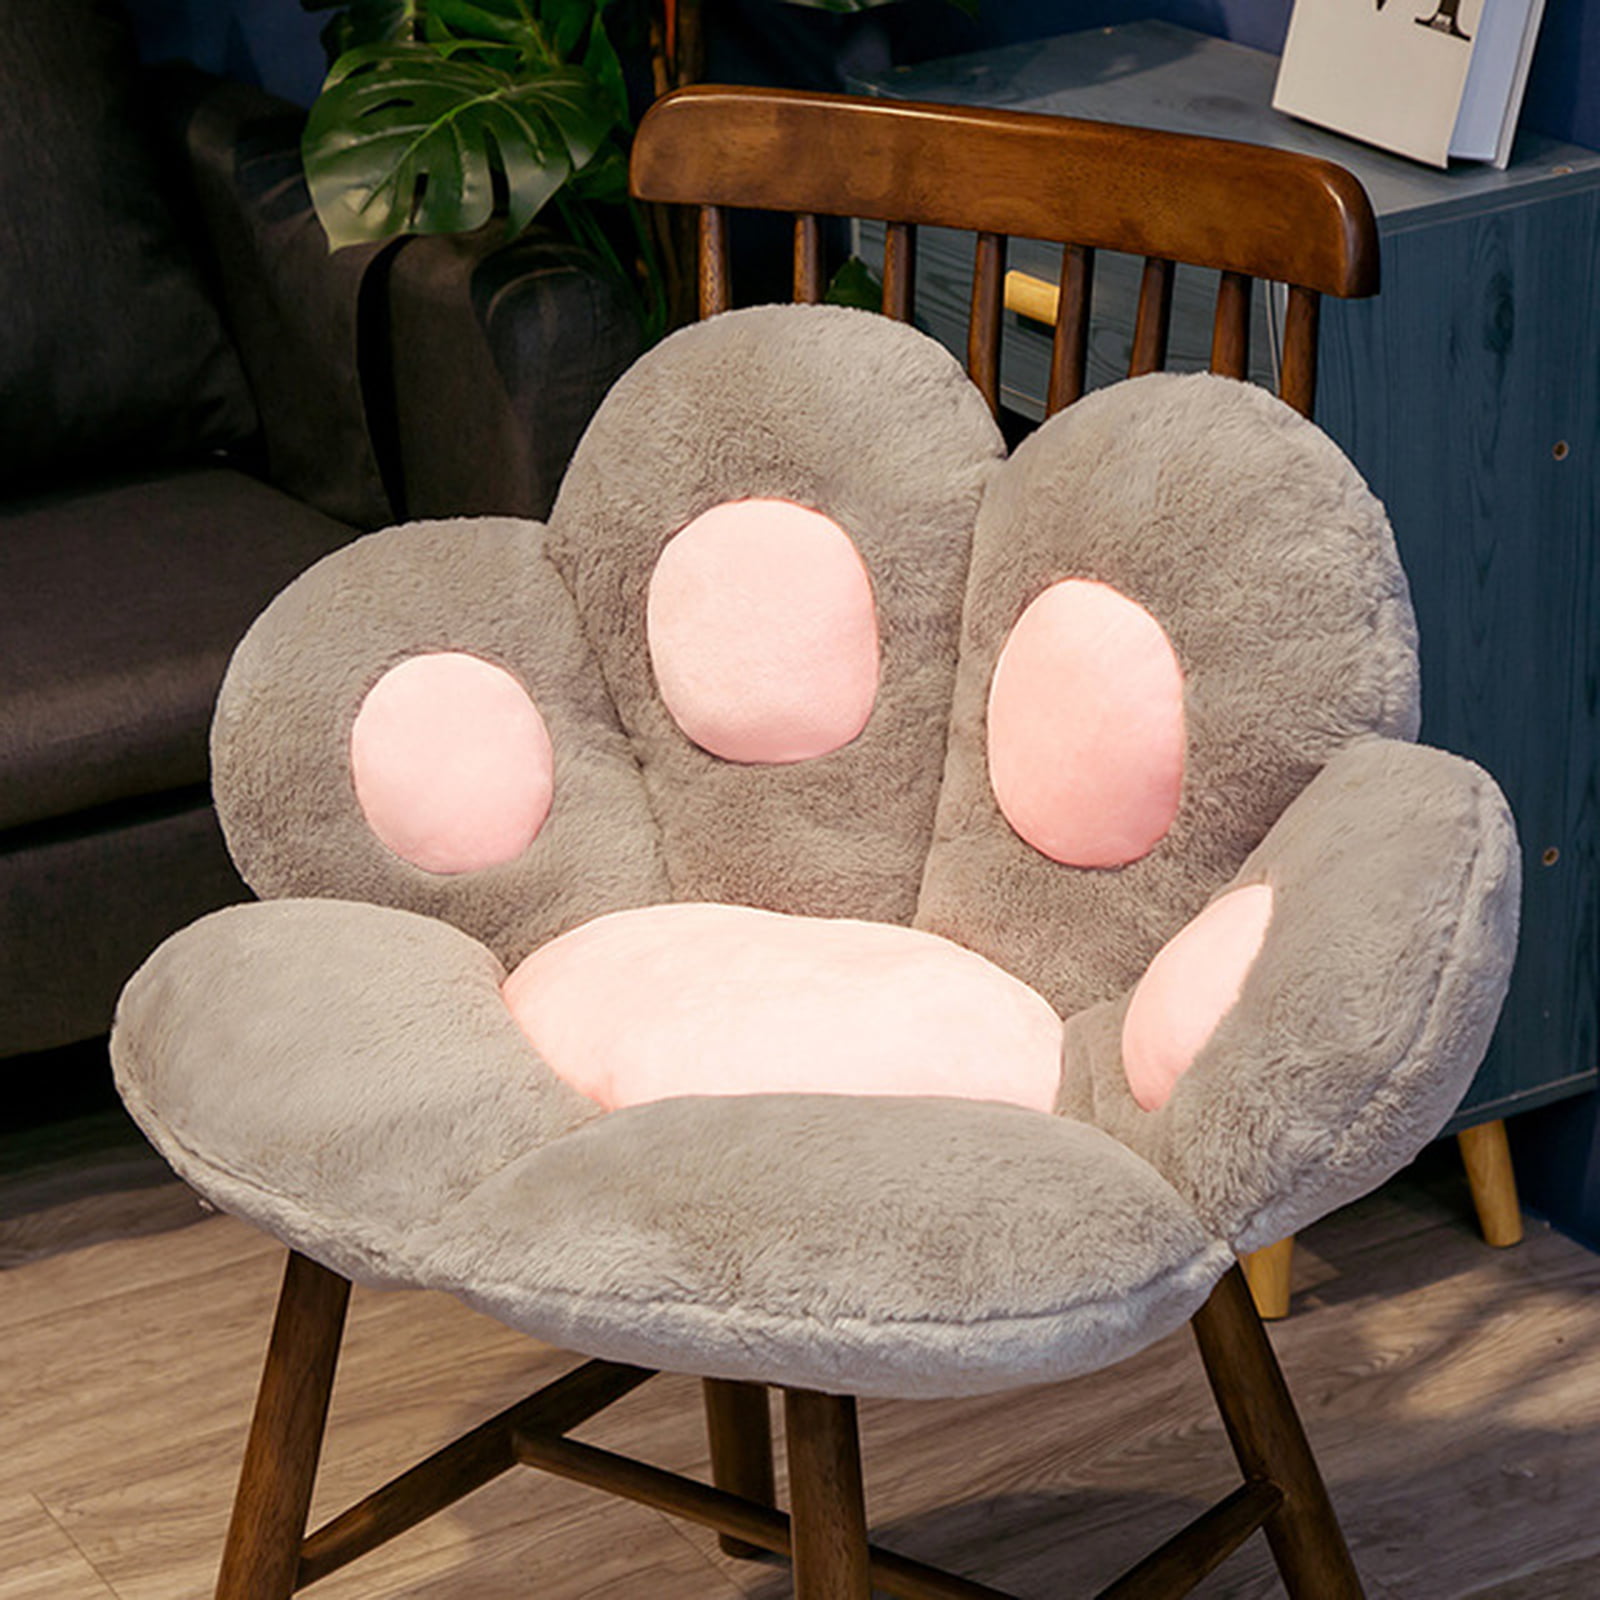 Yoruii Cute Seat Cushion,Cat Paw Shape Lazy Sofa Office Seat Cushion,Plush Sofa Cushion Soft and Comfortable Cushion Pillow Home Bedroom Shop Restaurant Decoration Blue